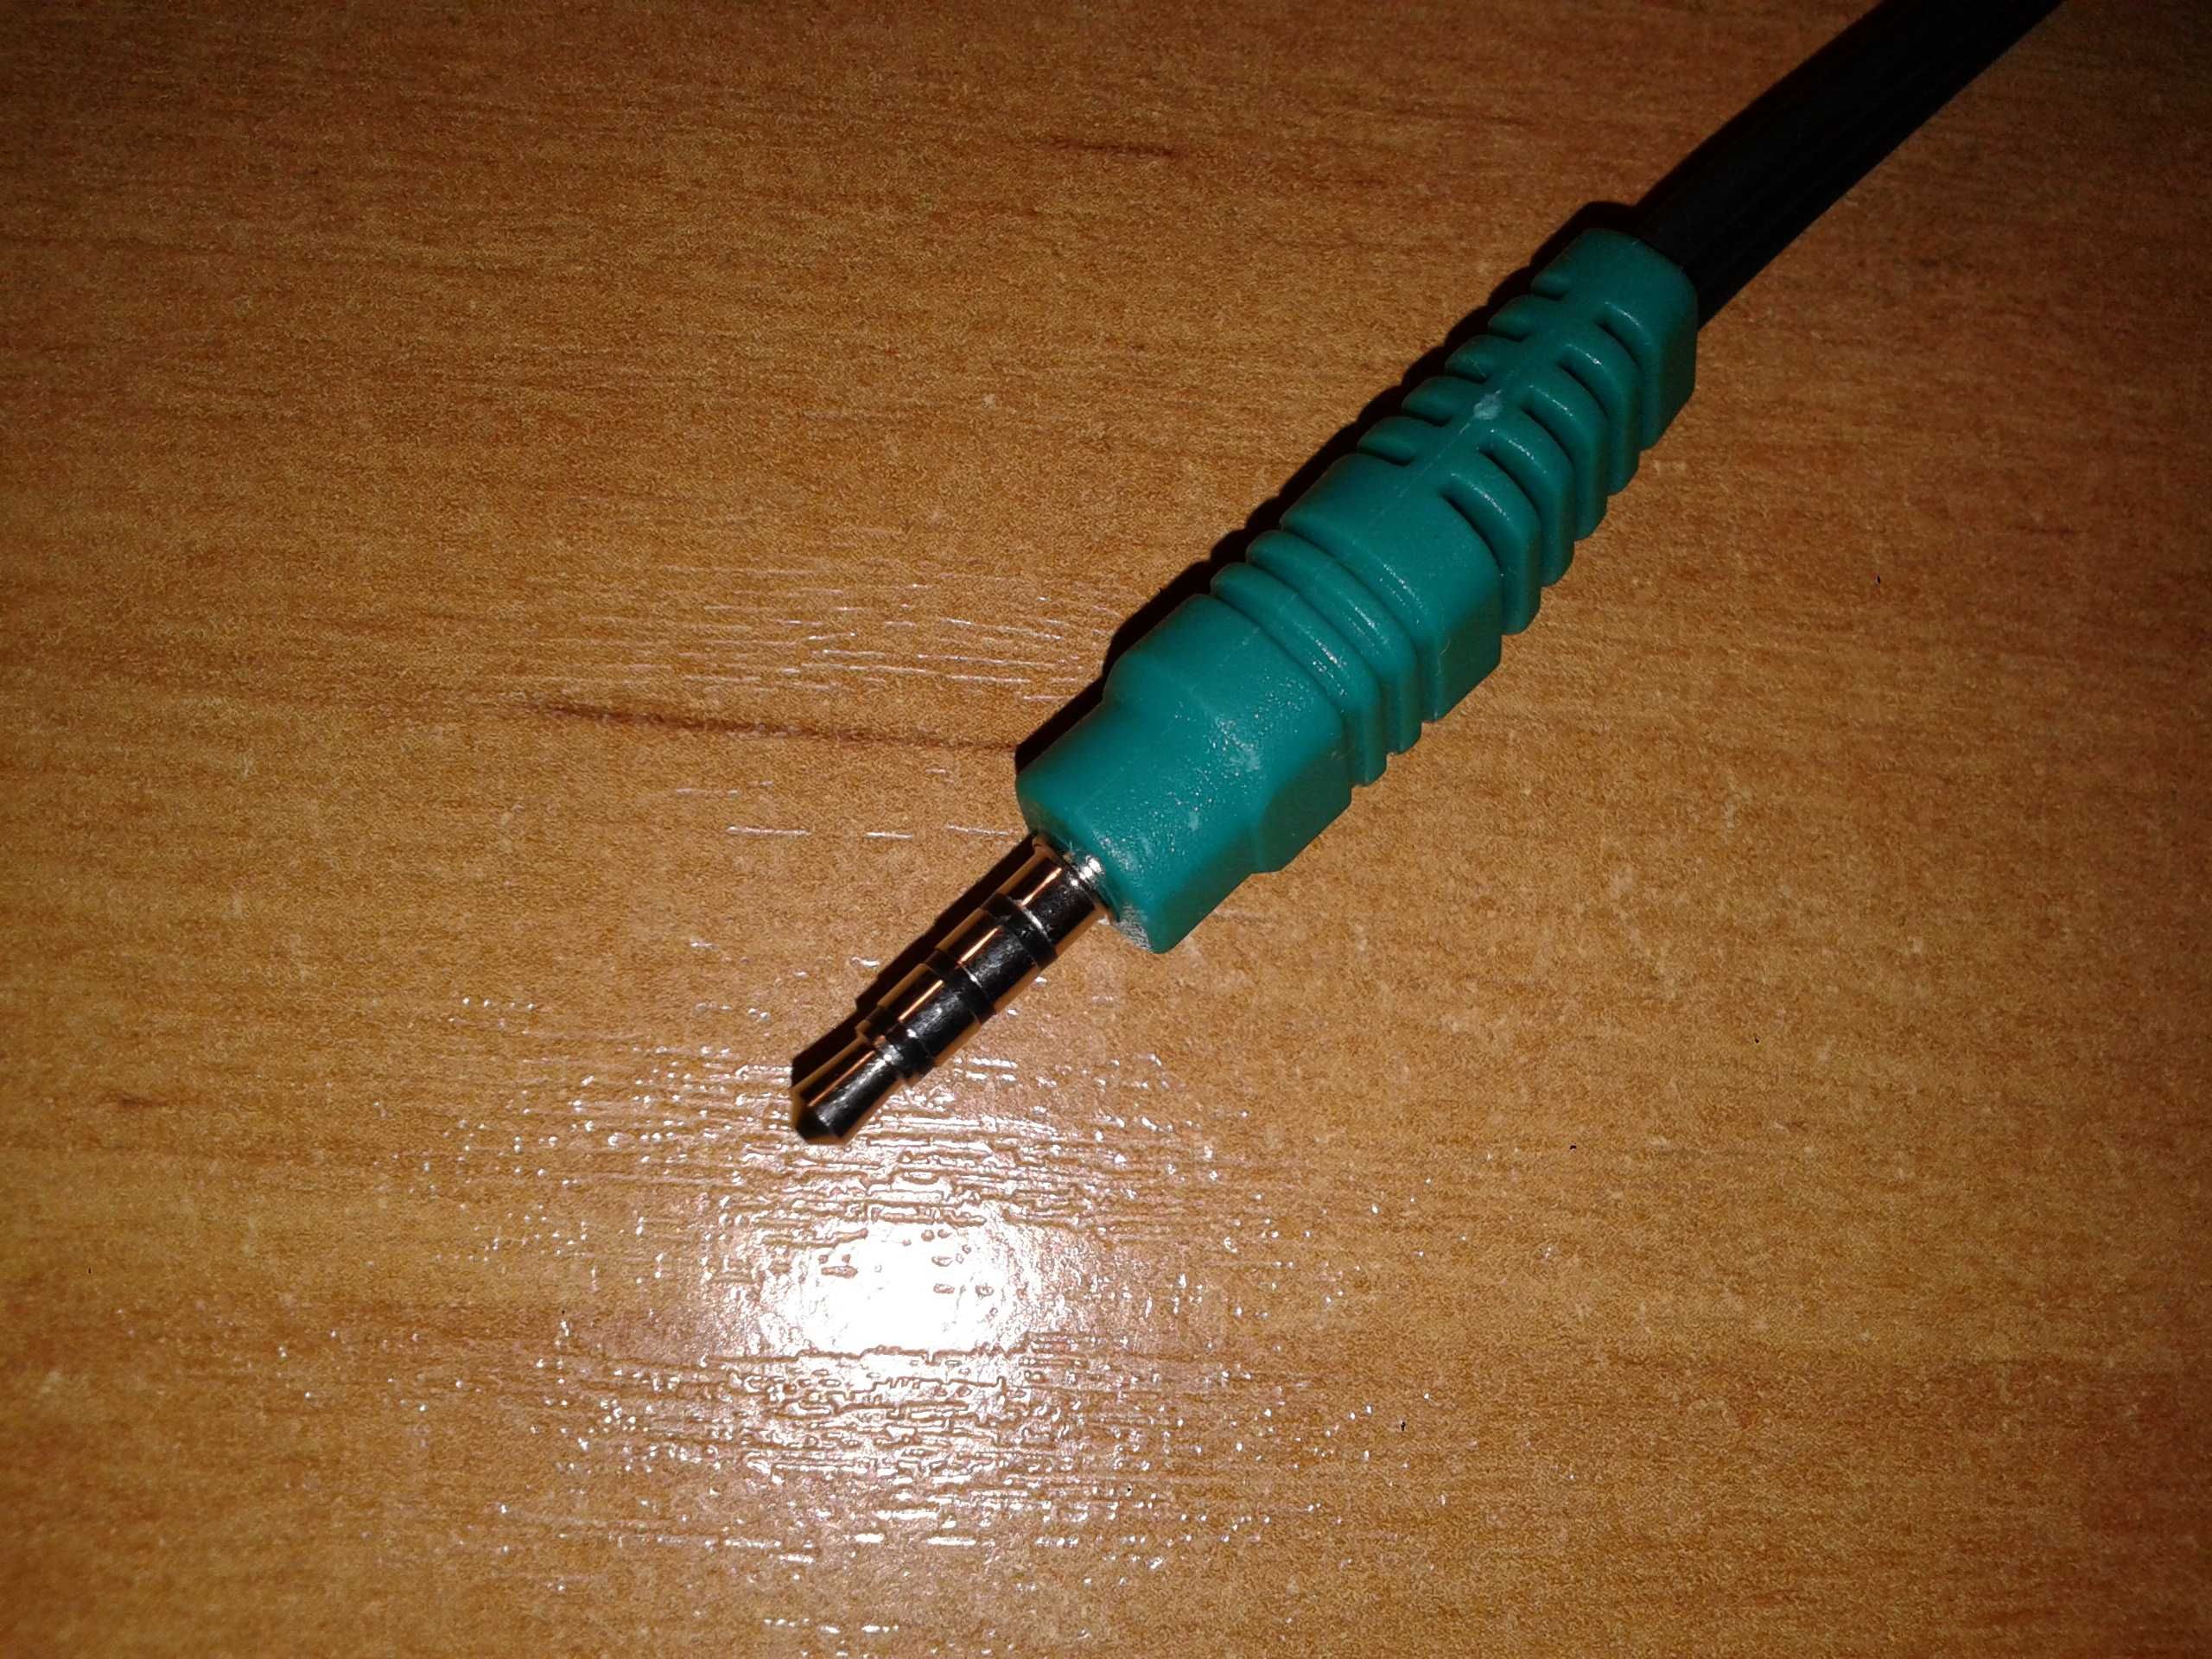 Kabel 4PIN minijack (3,5 mm) - 3x RCA (cinch) 0,25m Audio Video